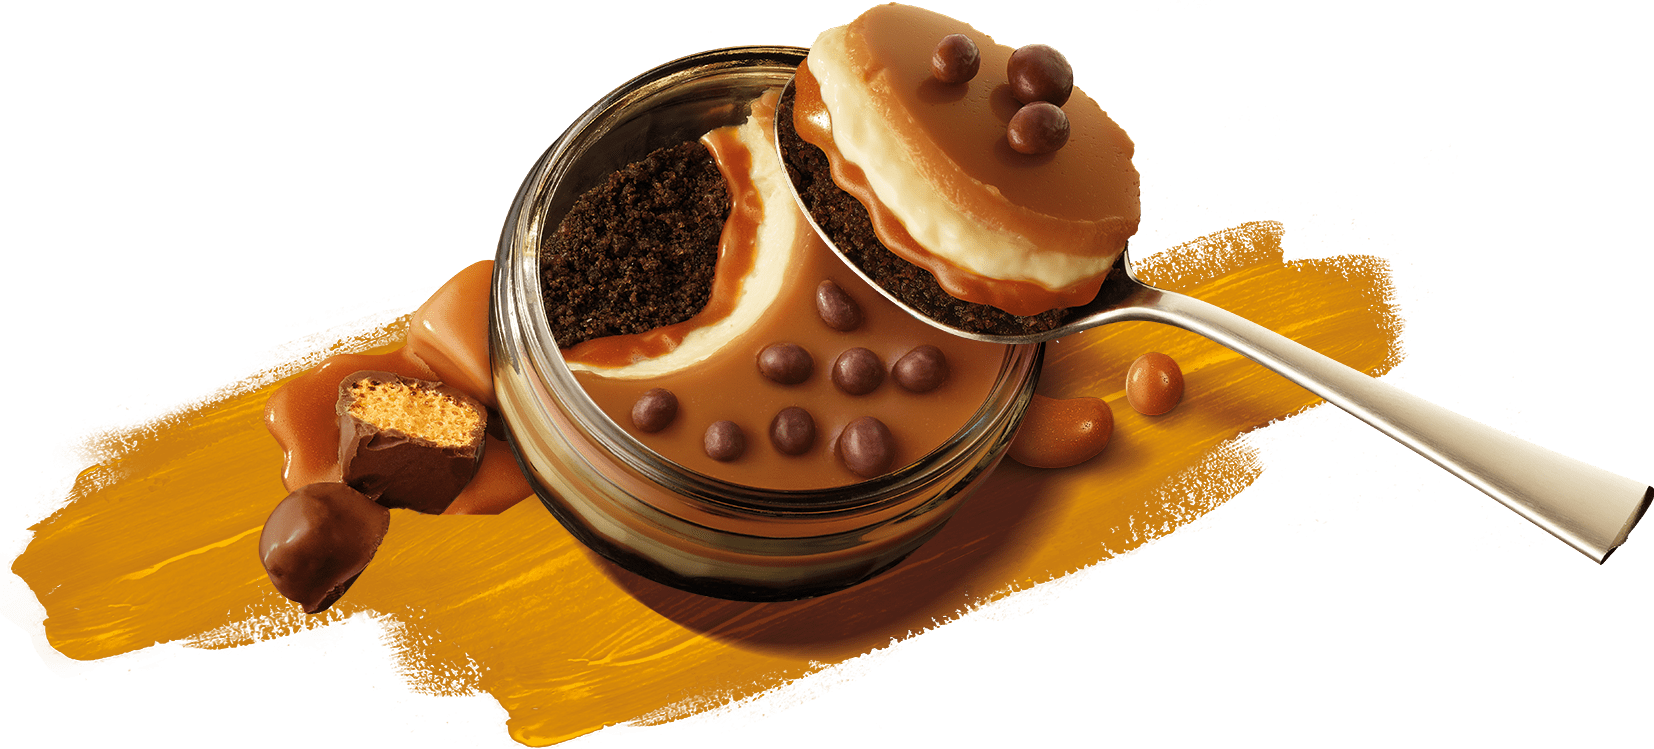 gu inspirations chocolate and honeycomb treats